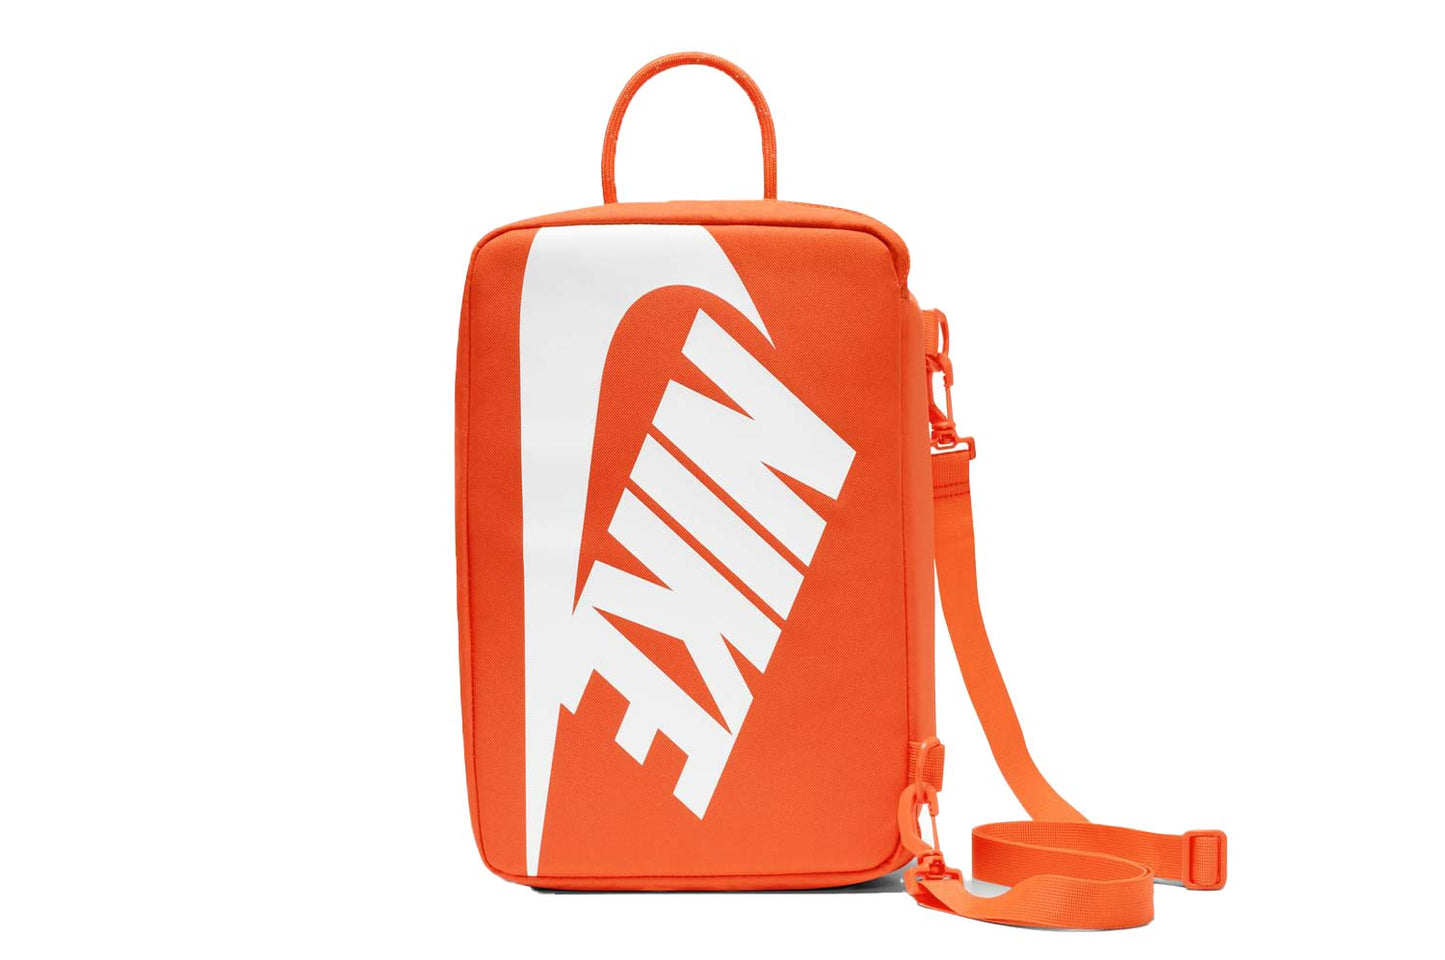 Shoebox Bag (8L)